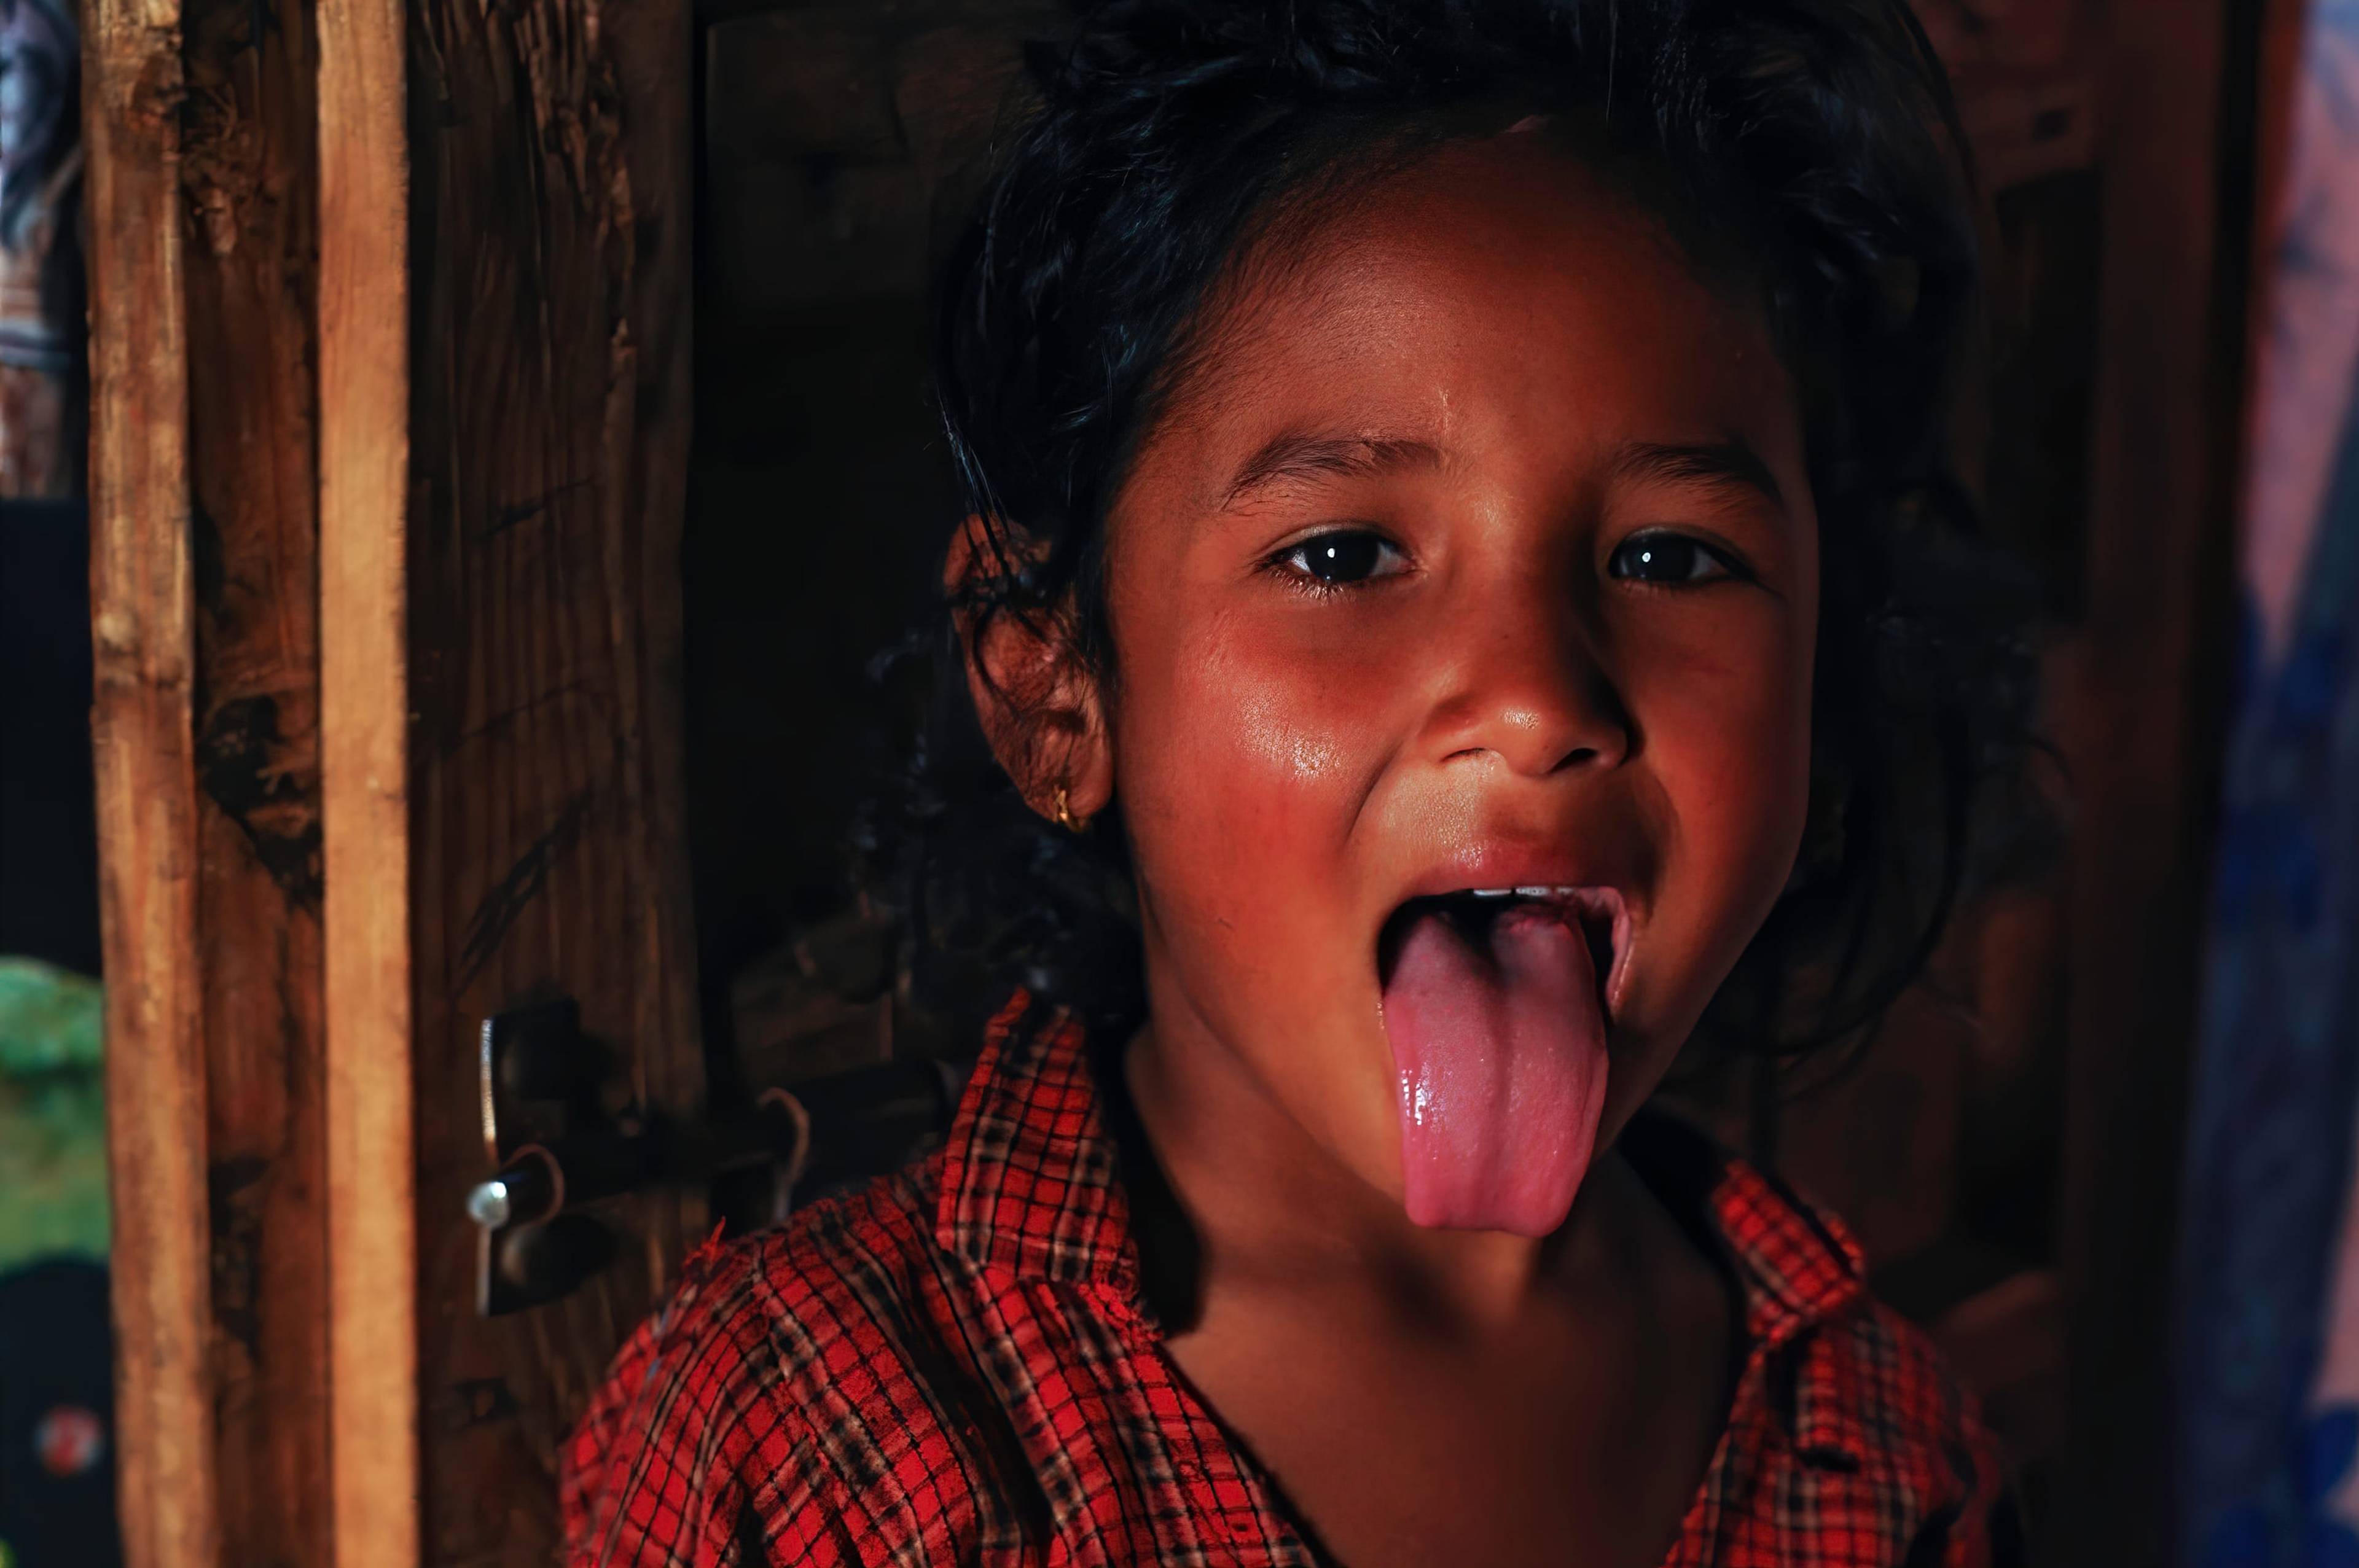 bambina mostra la lingua al fotografo